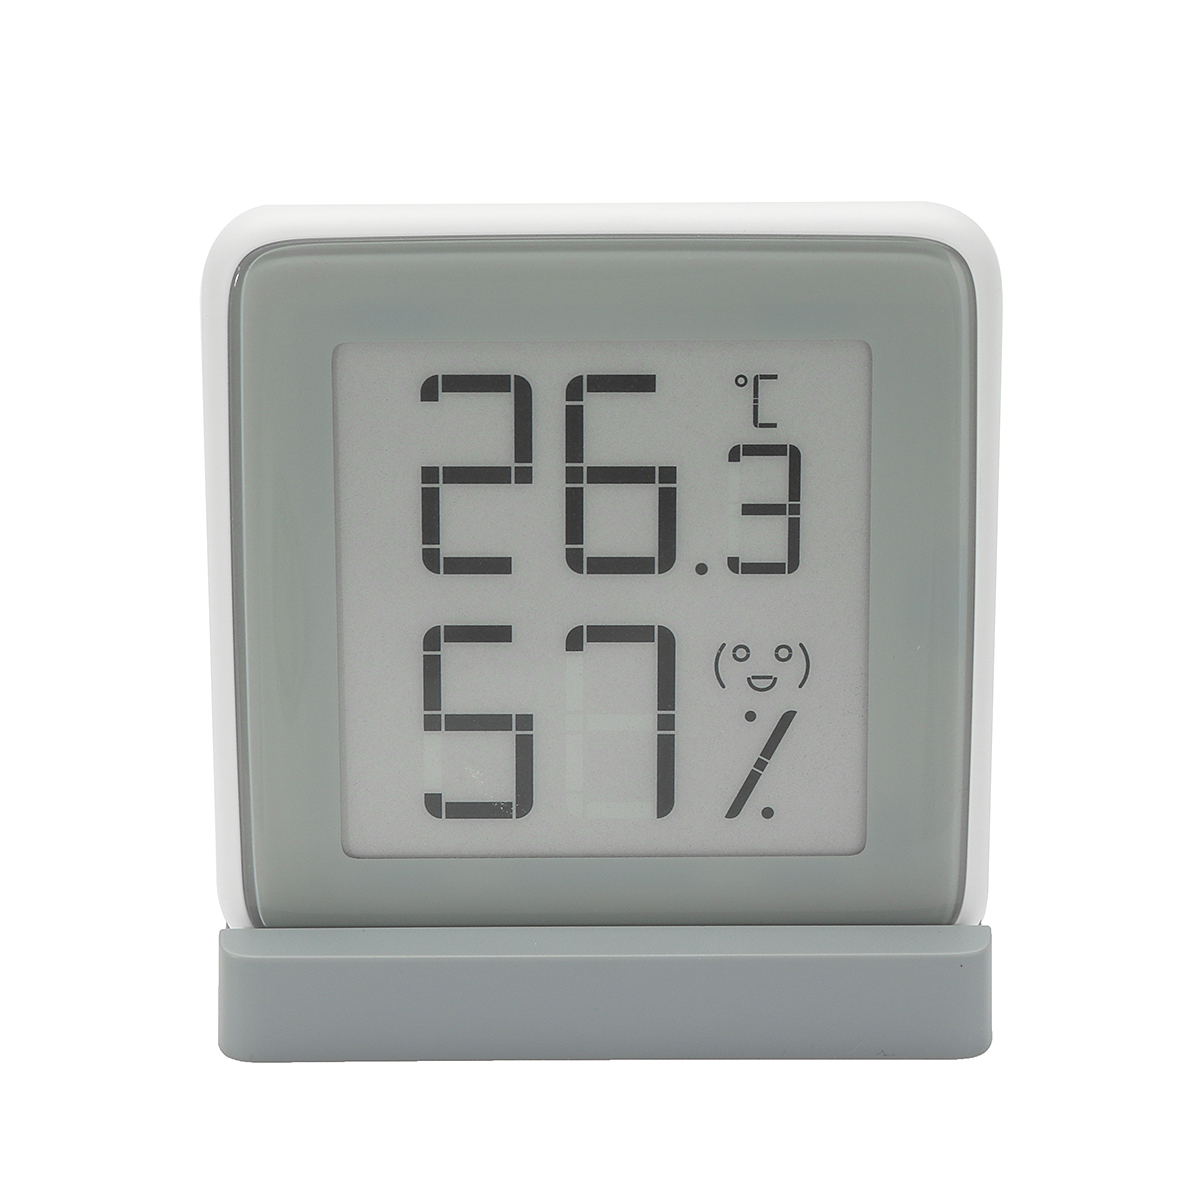 

Mini Digital Thermometer Humidity Meter Room Temperature Indoor Hygrometer LCD